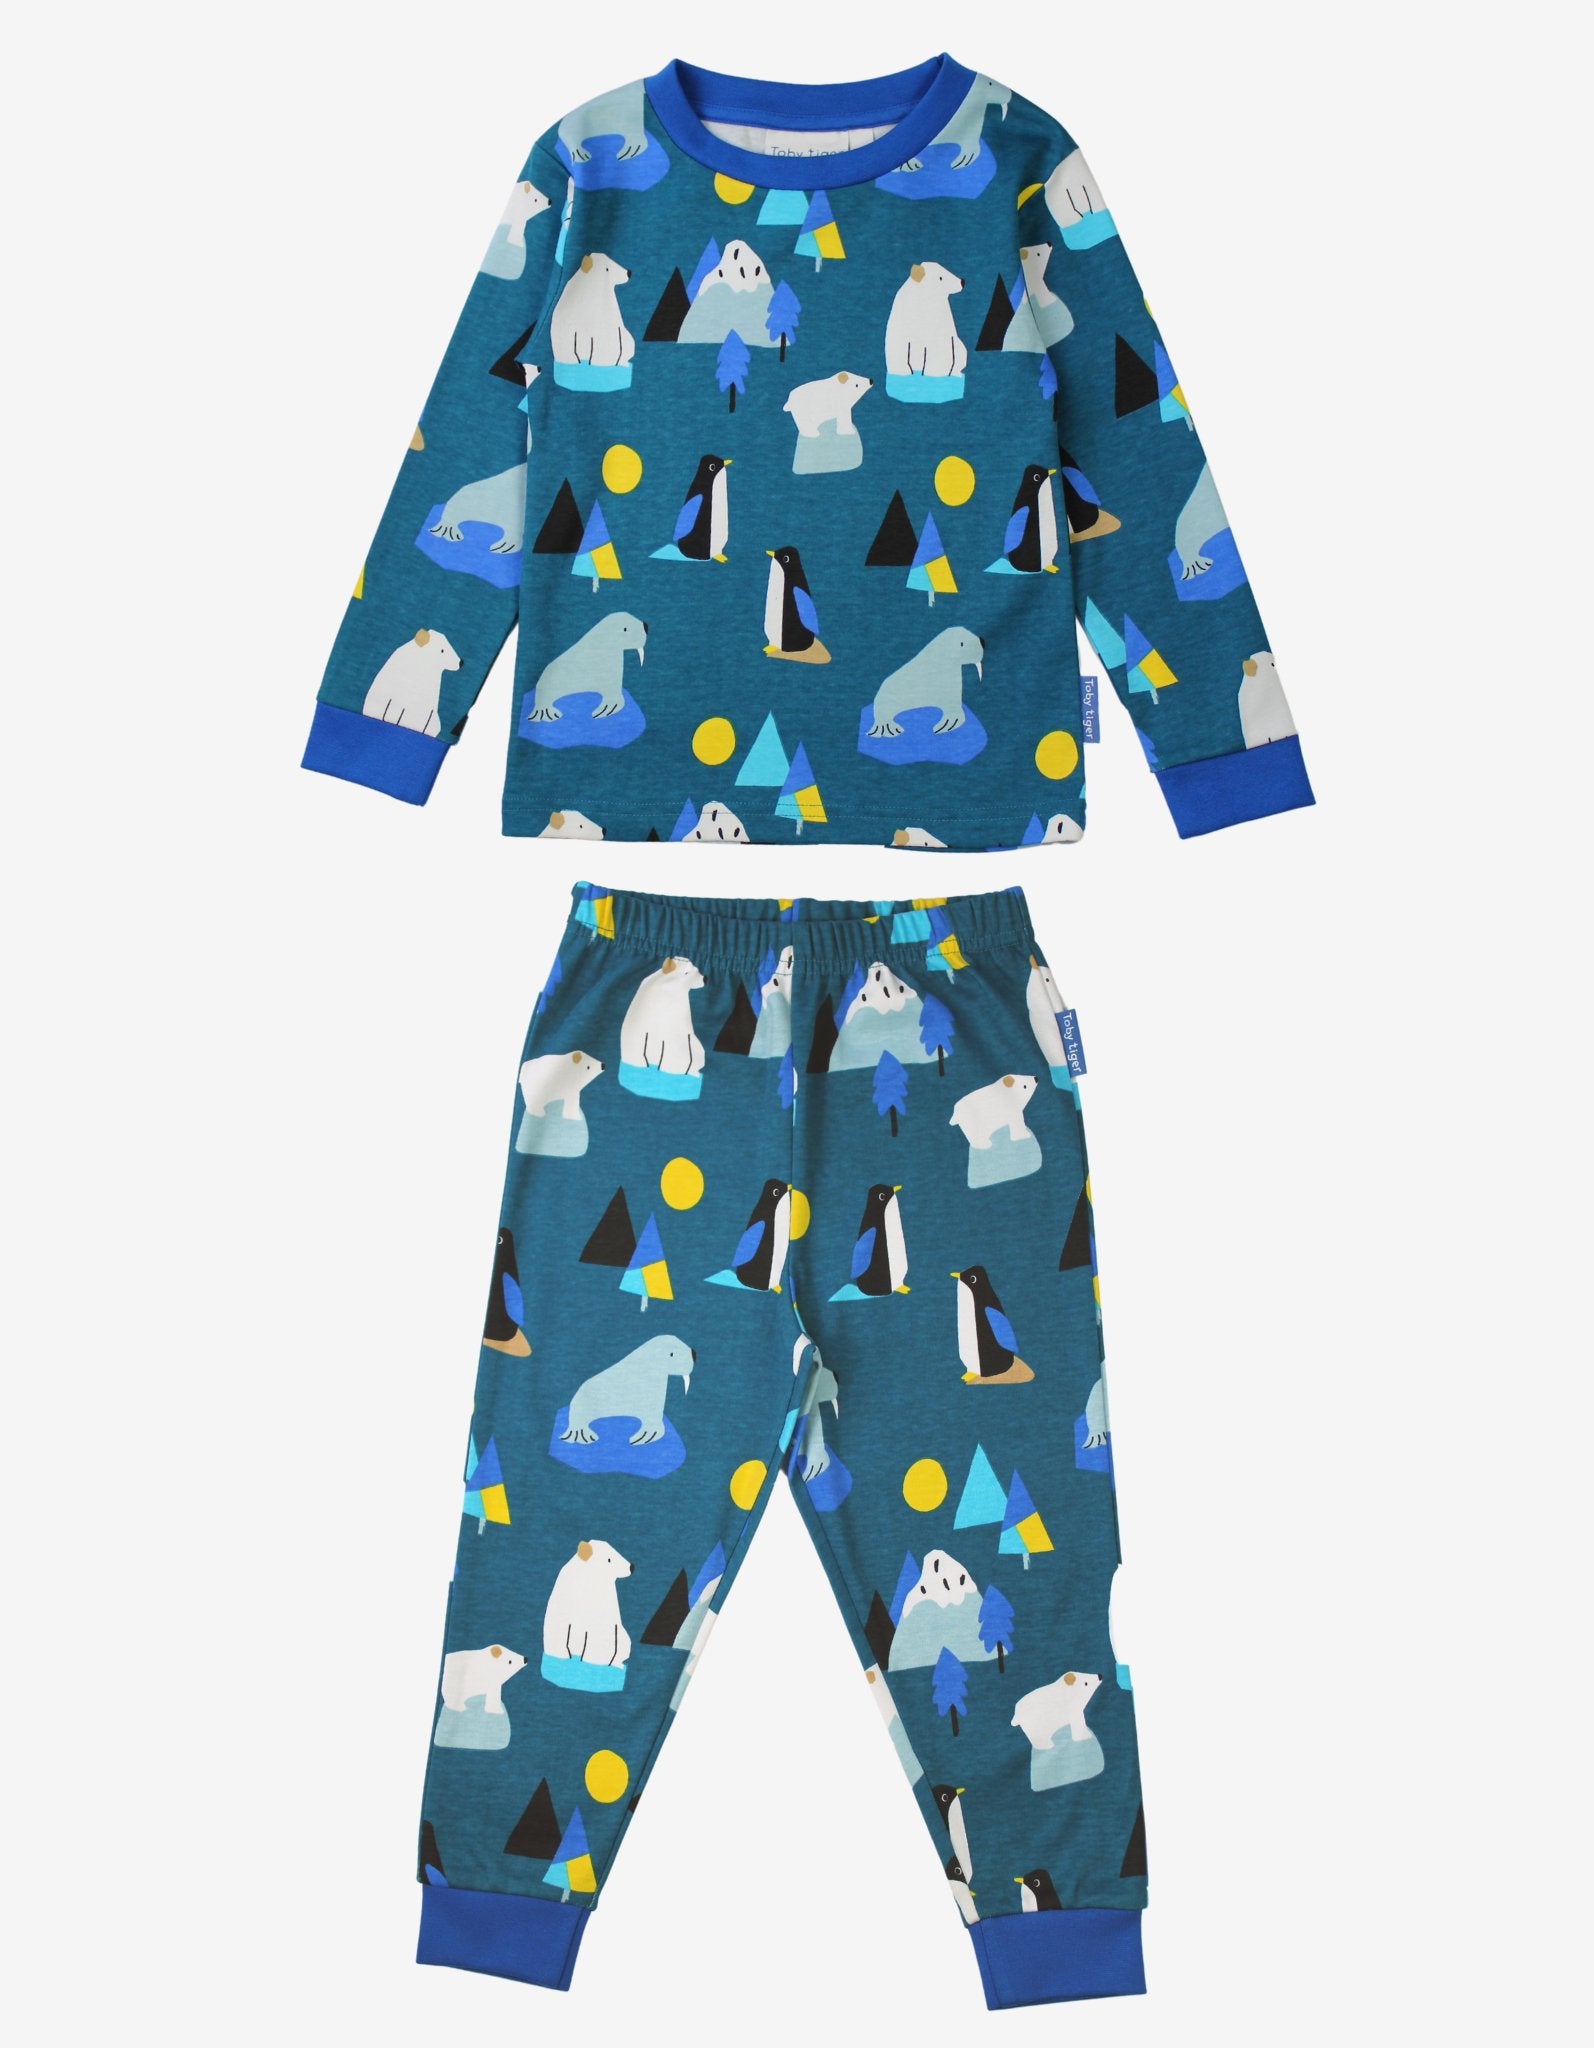 Organic Arctic Print Pyjamas - Toby Tiger